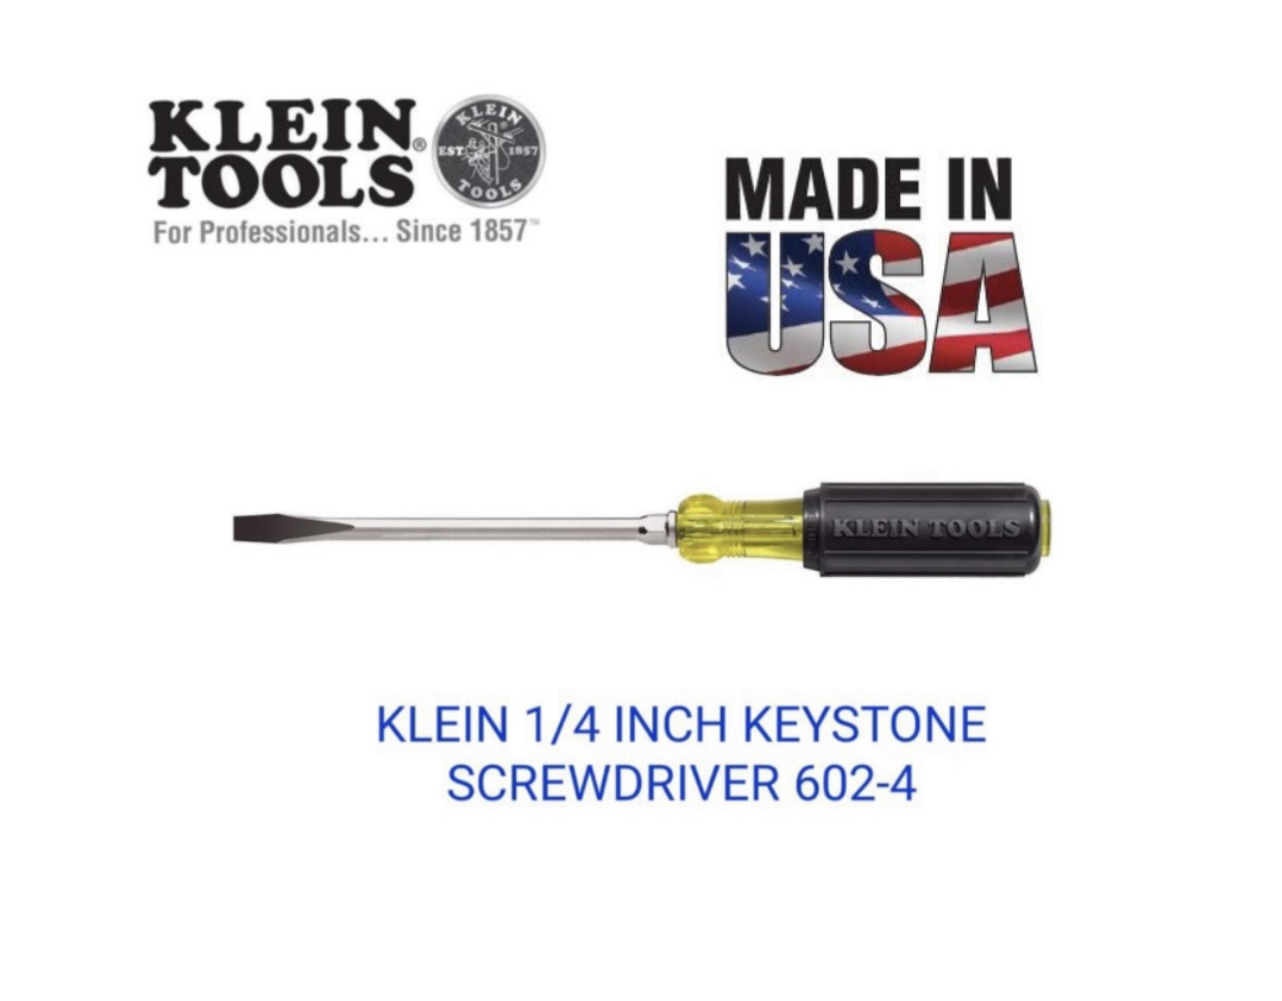 Buy Klein Screwdriver online | Lazada.com.ph